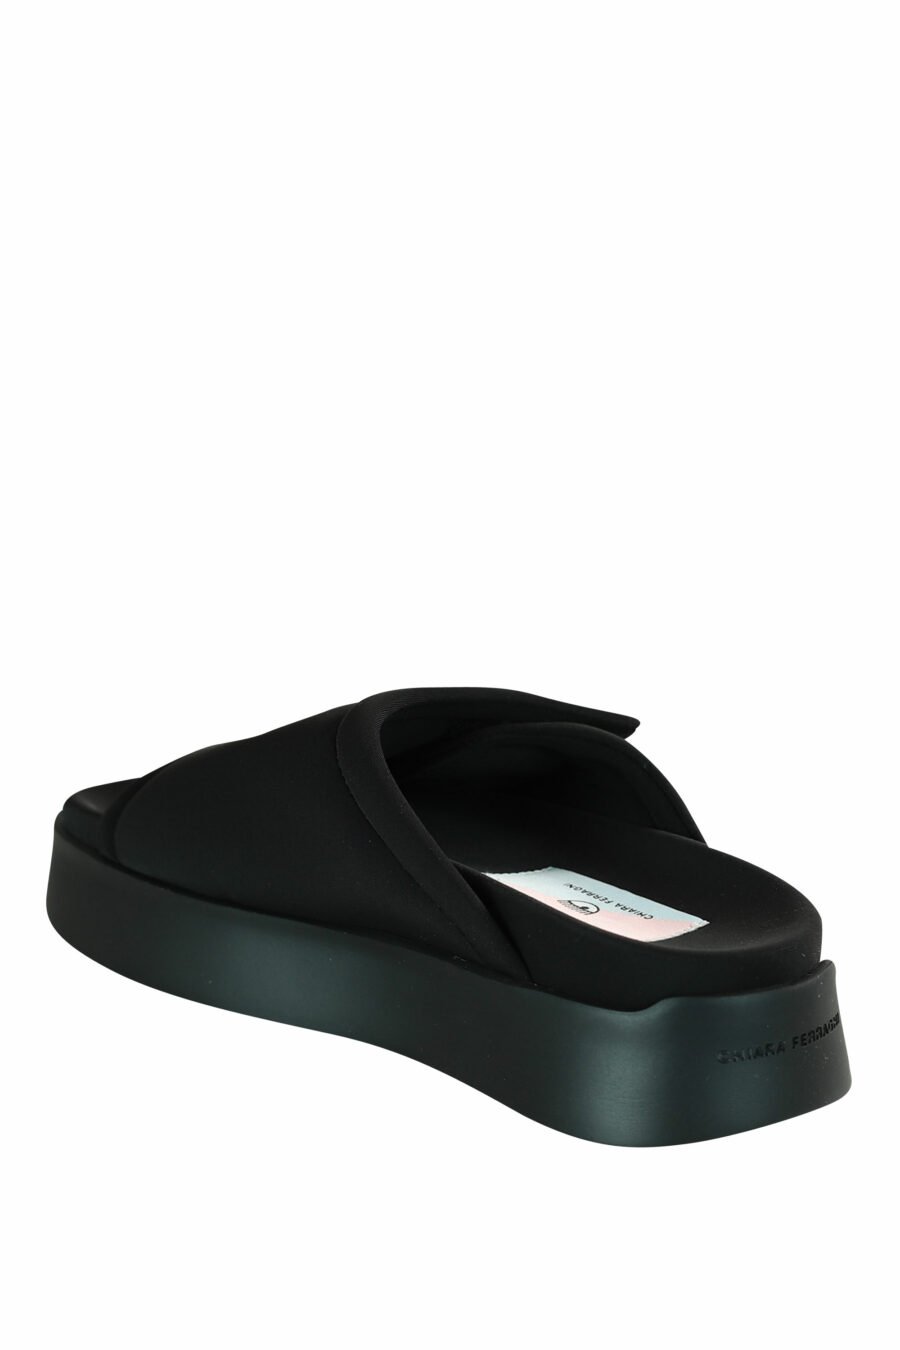 Black sandals with velcro and black platform - 8059482630771 4